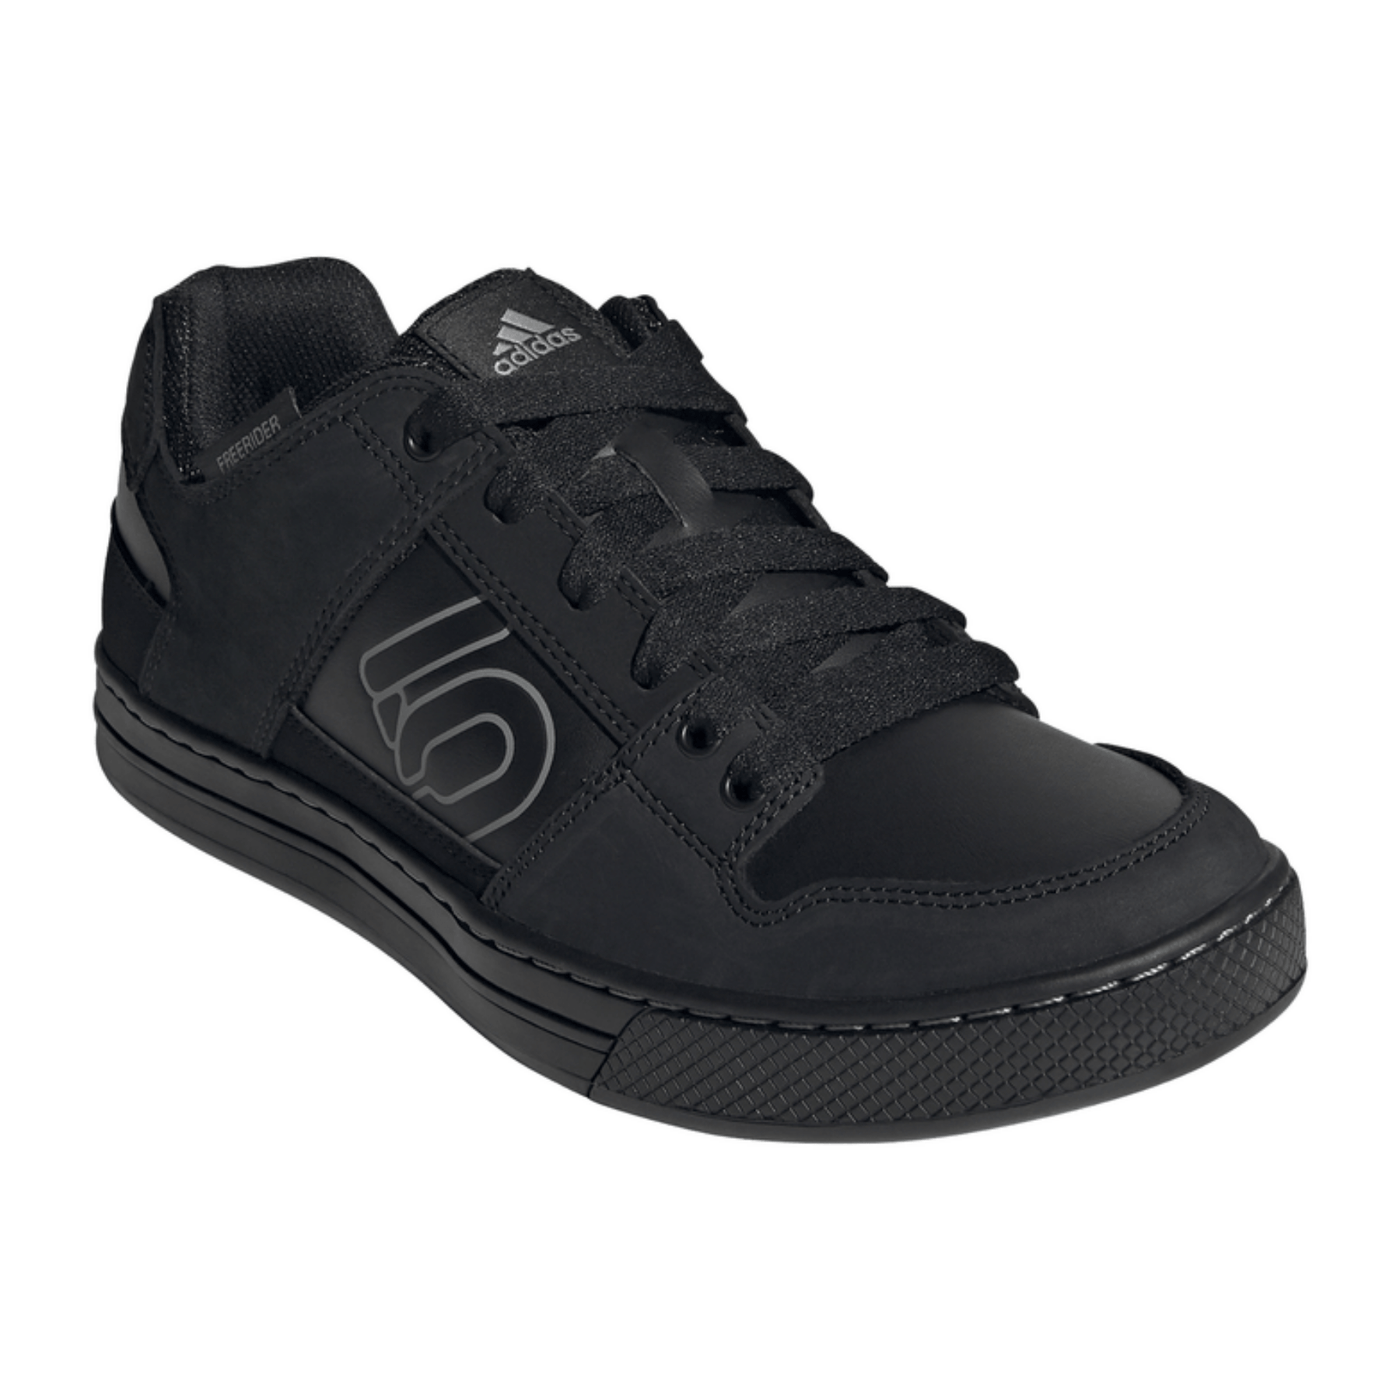 Five Ten Shoes Freerider DLX - Core Black / Core Black / Grey Three